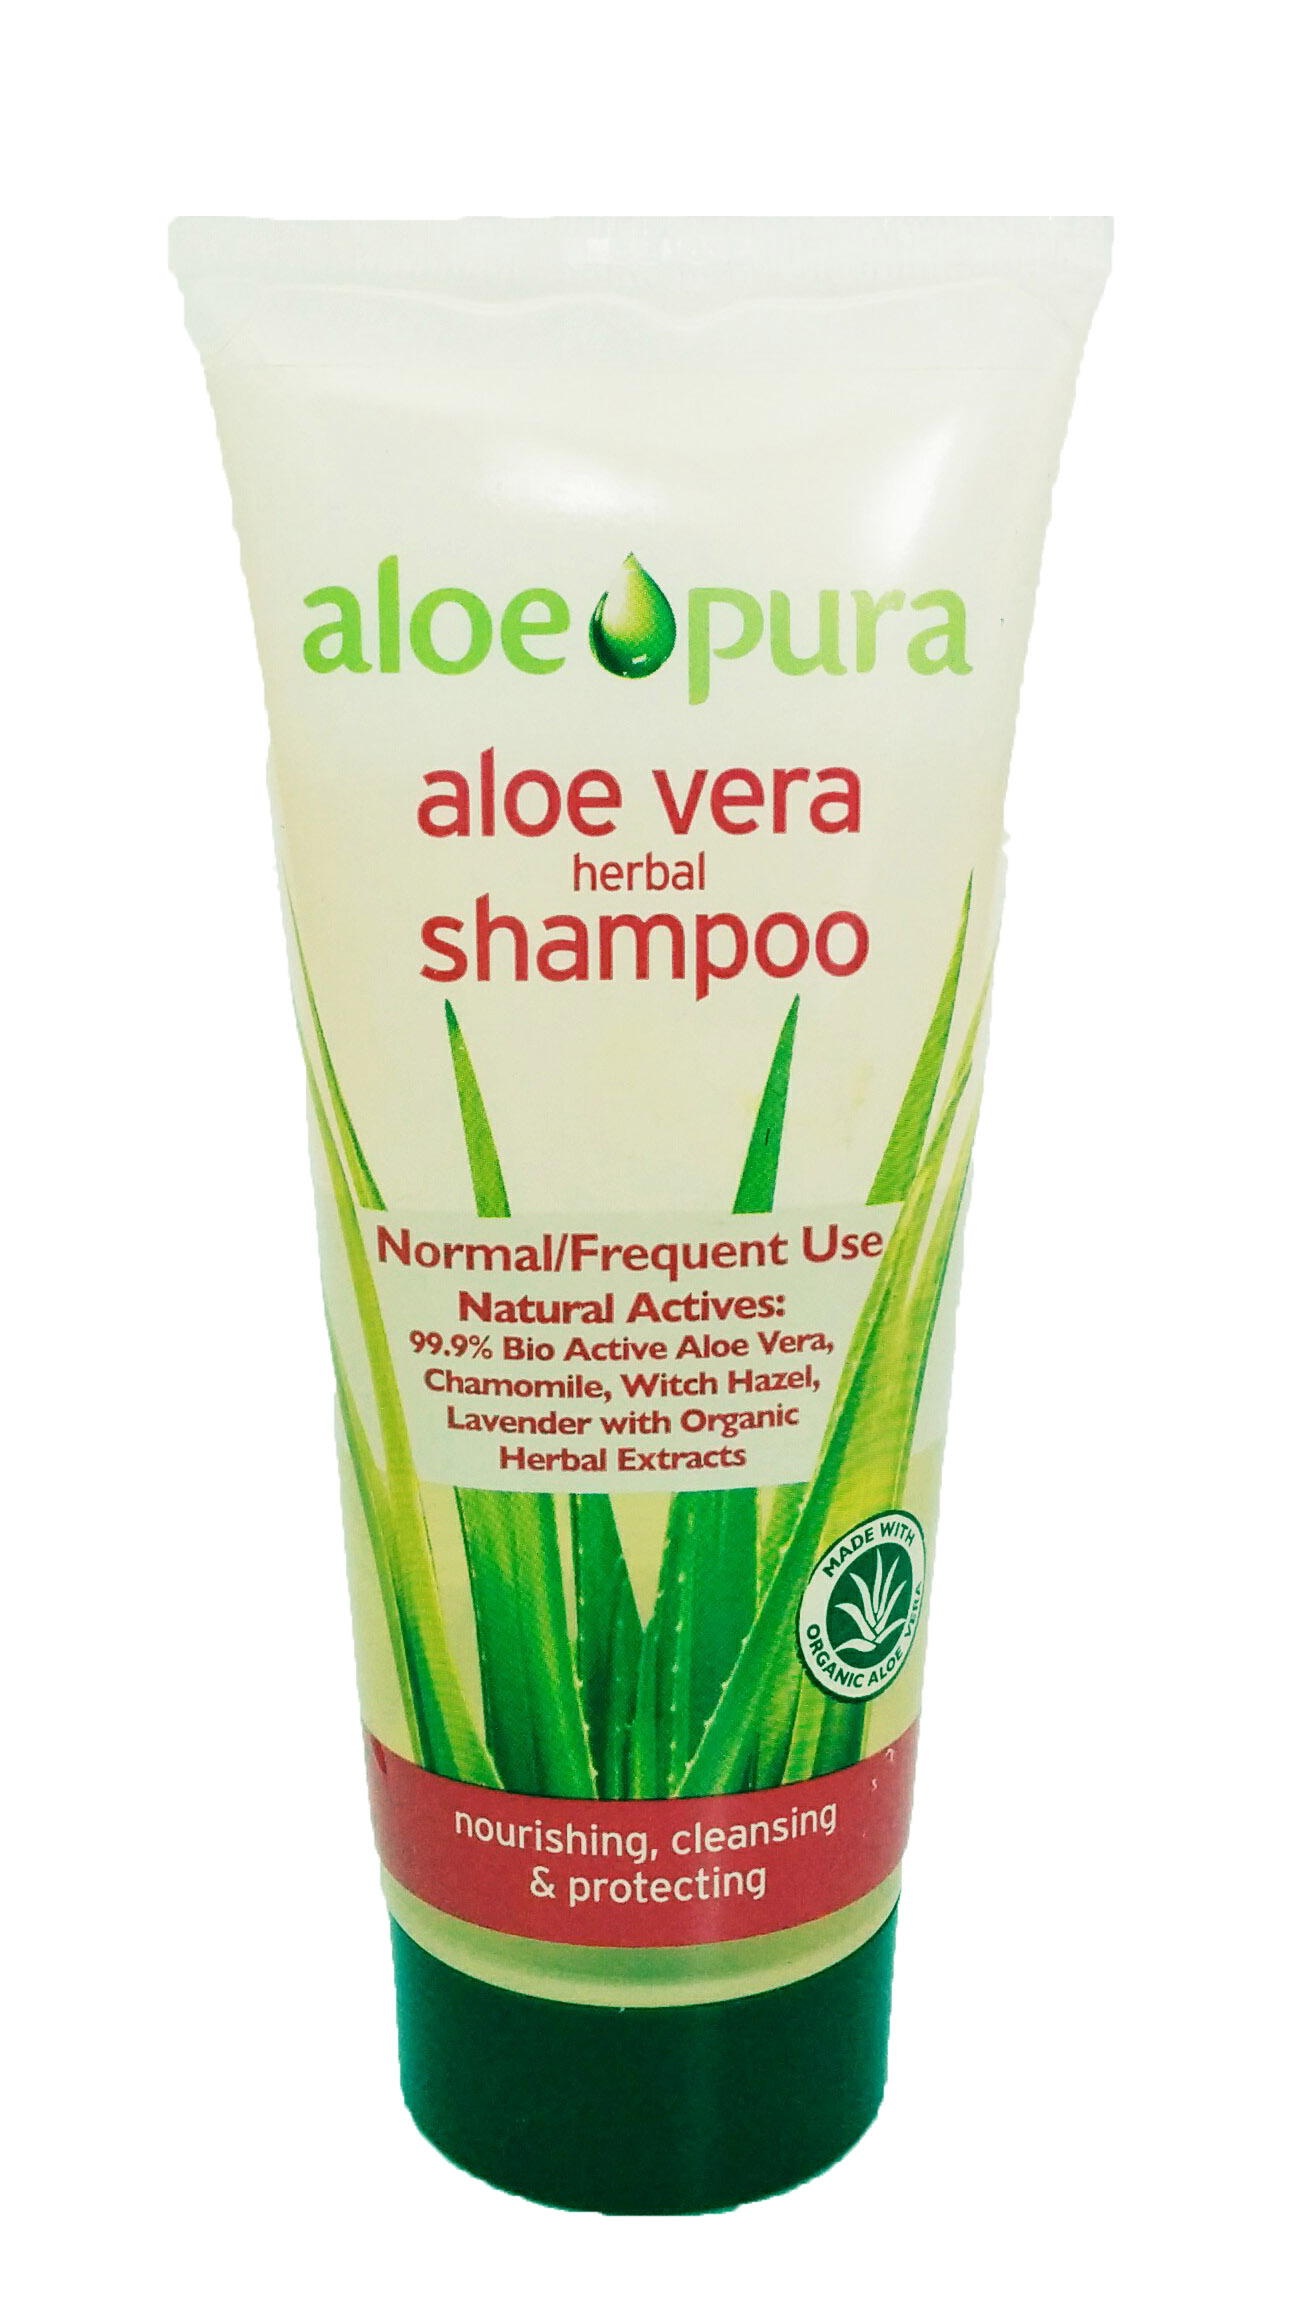 Aloe Pura - Aloe Vera Shampoo (for Normal/Frequent Use) 200ml